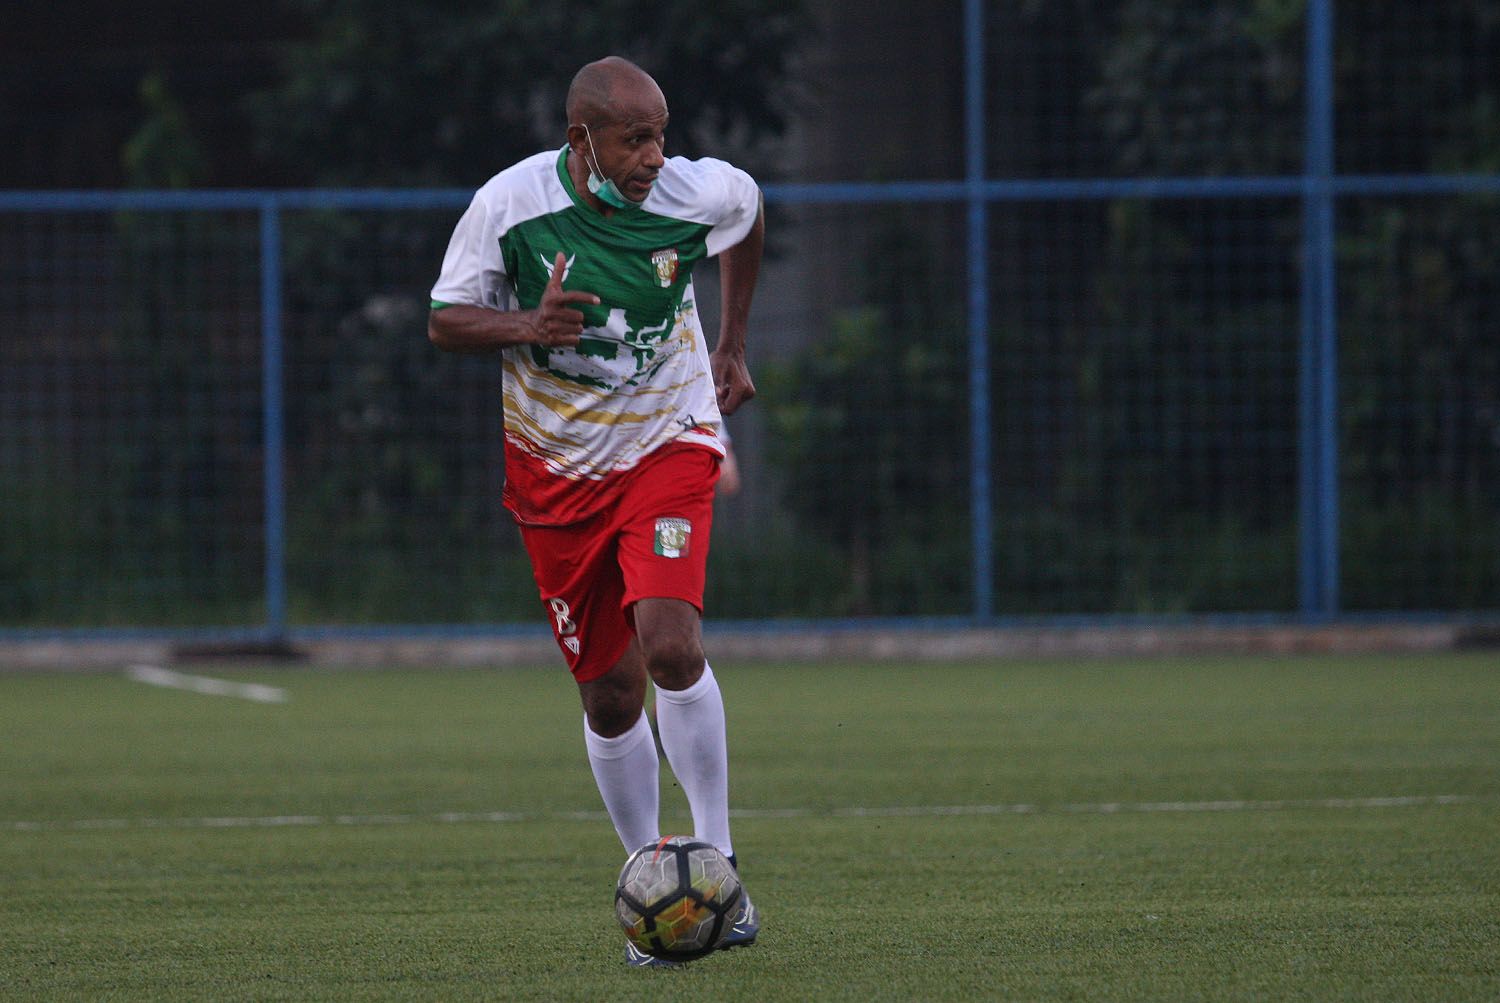 Elie Aiboy, Pertandingan legenda Primavera Baretti Vs legenda Timnas Indonesia, Jakarta (11/07/2020)